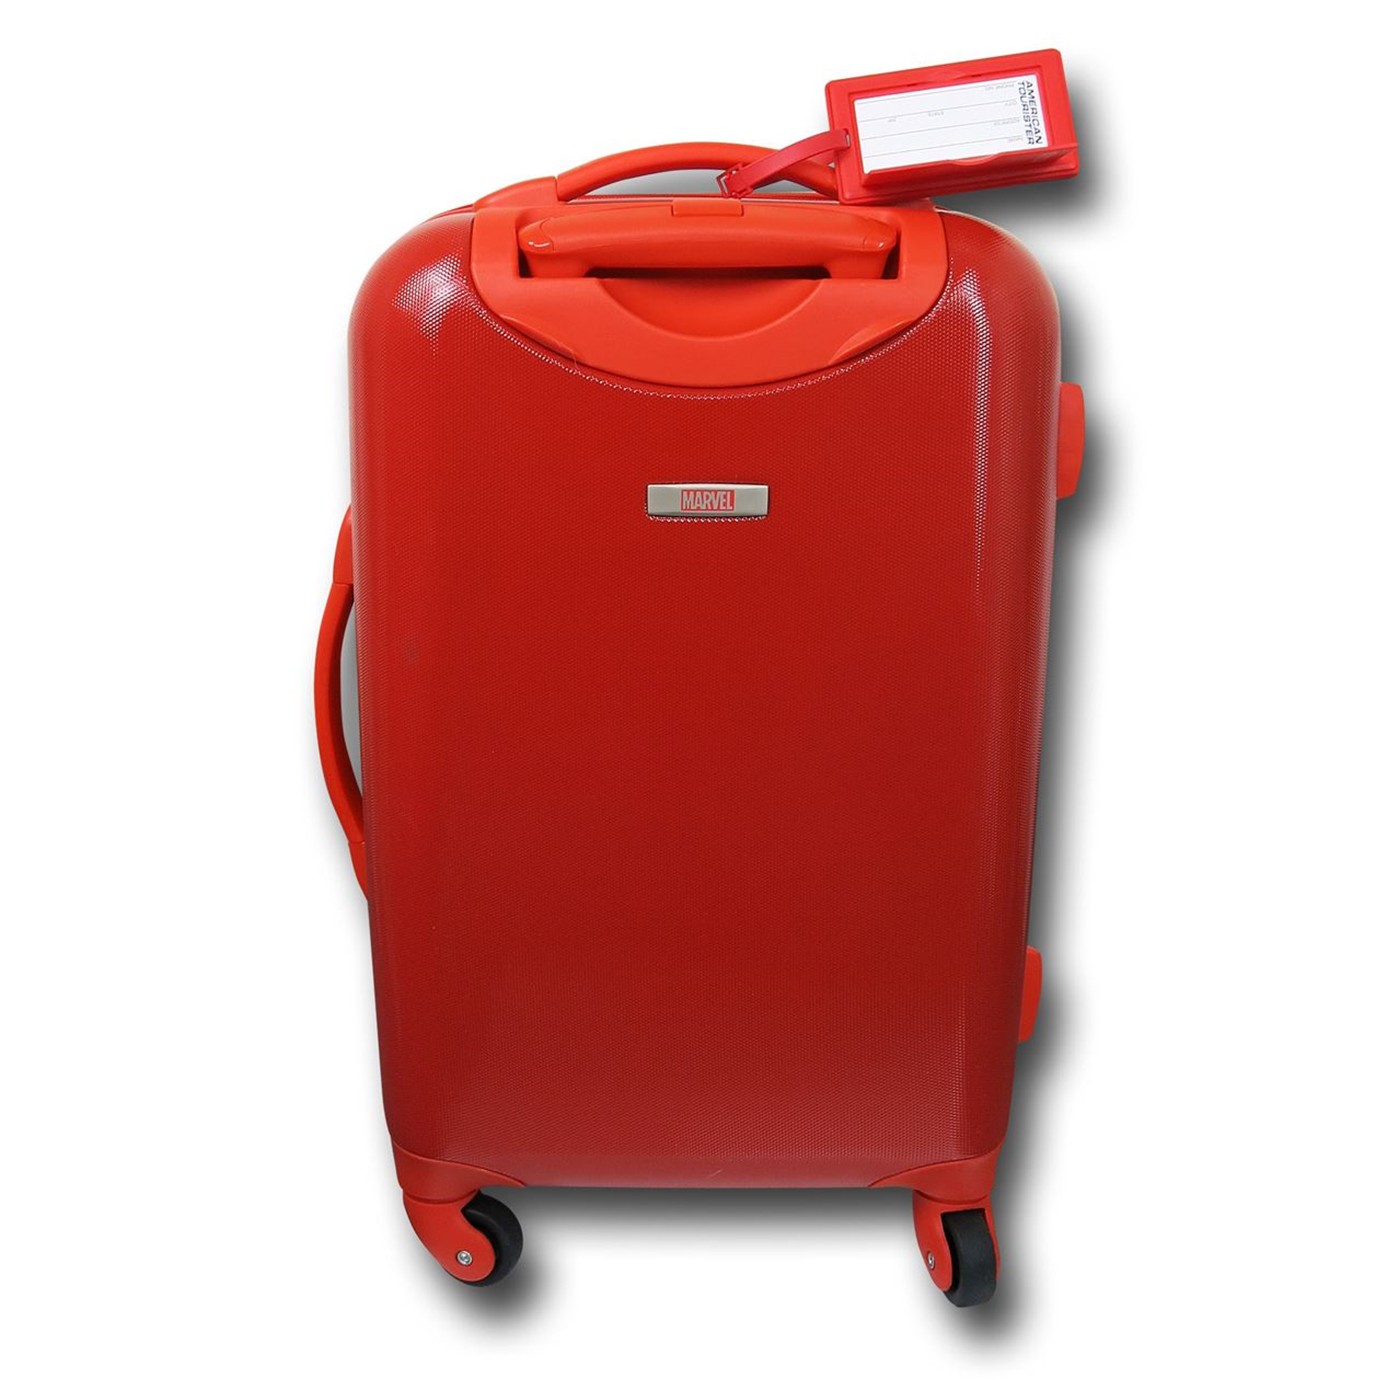 Iron Man Hardcase Samsonite Trolley Suitcase